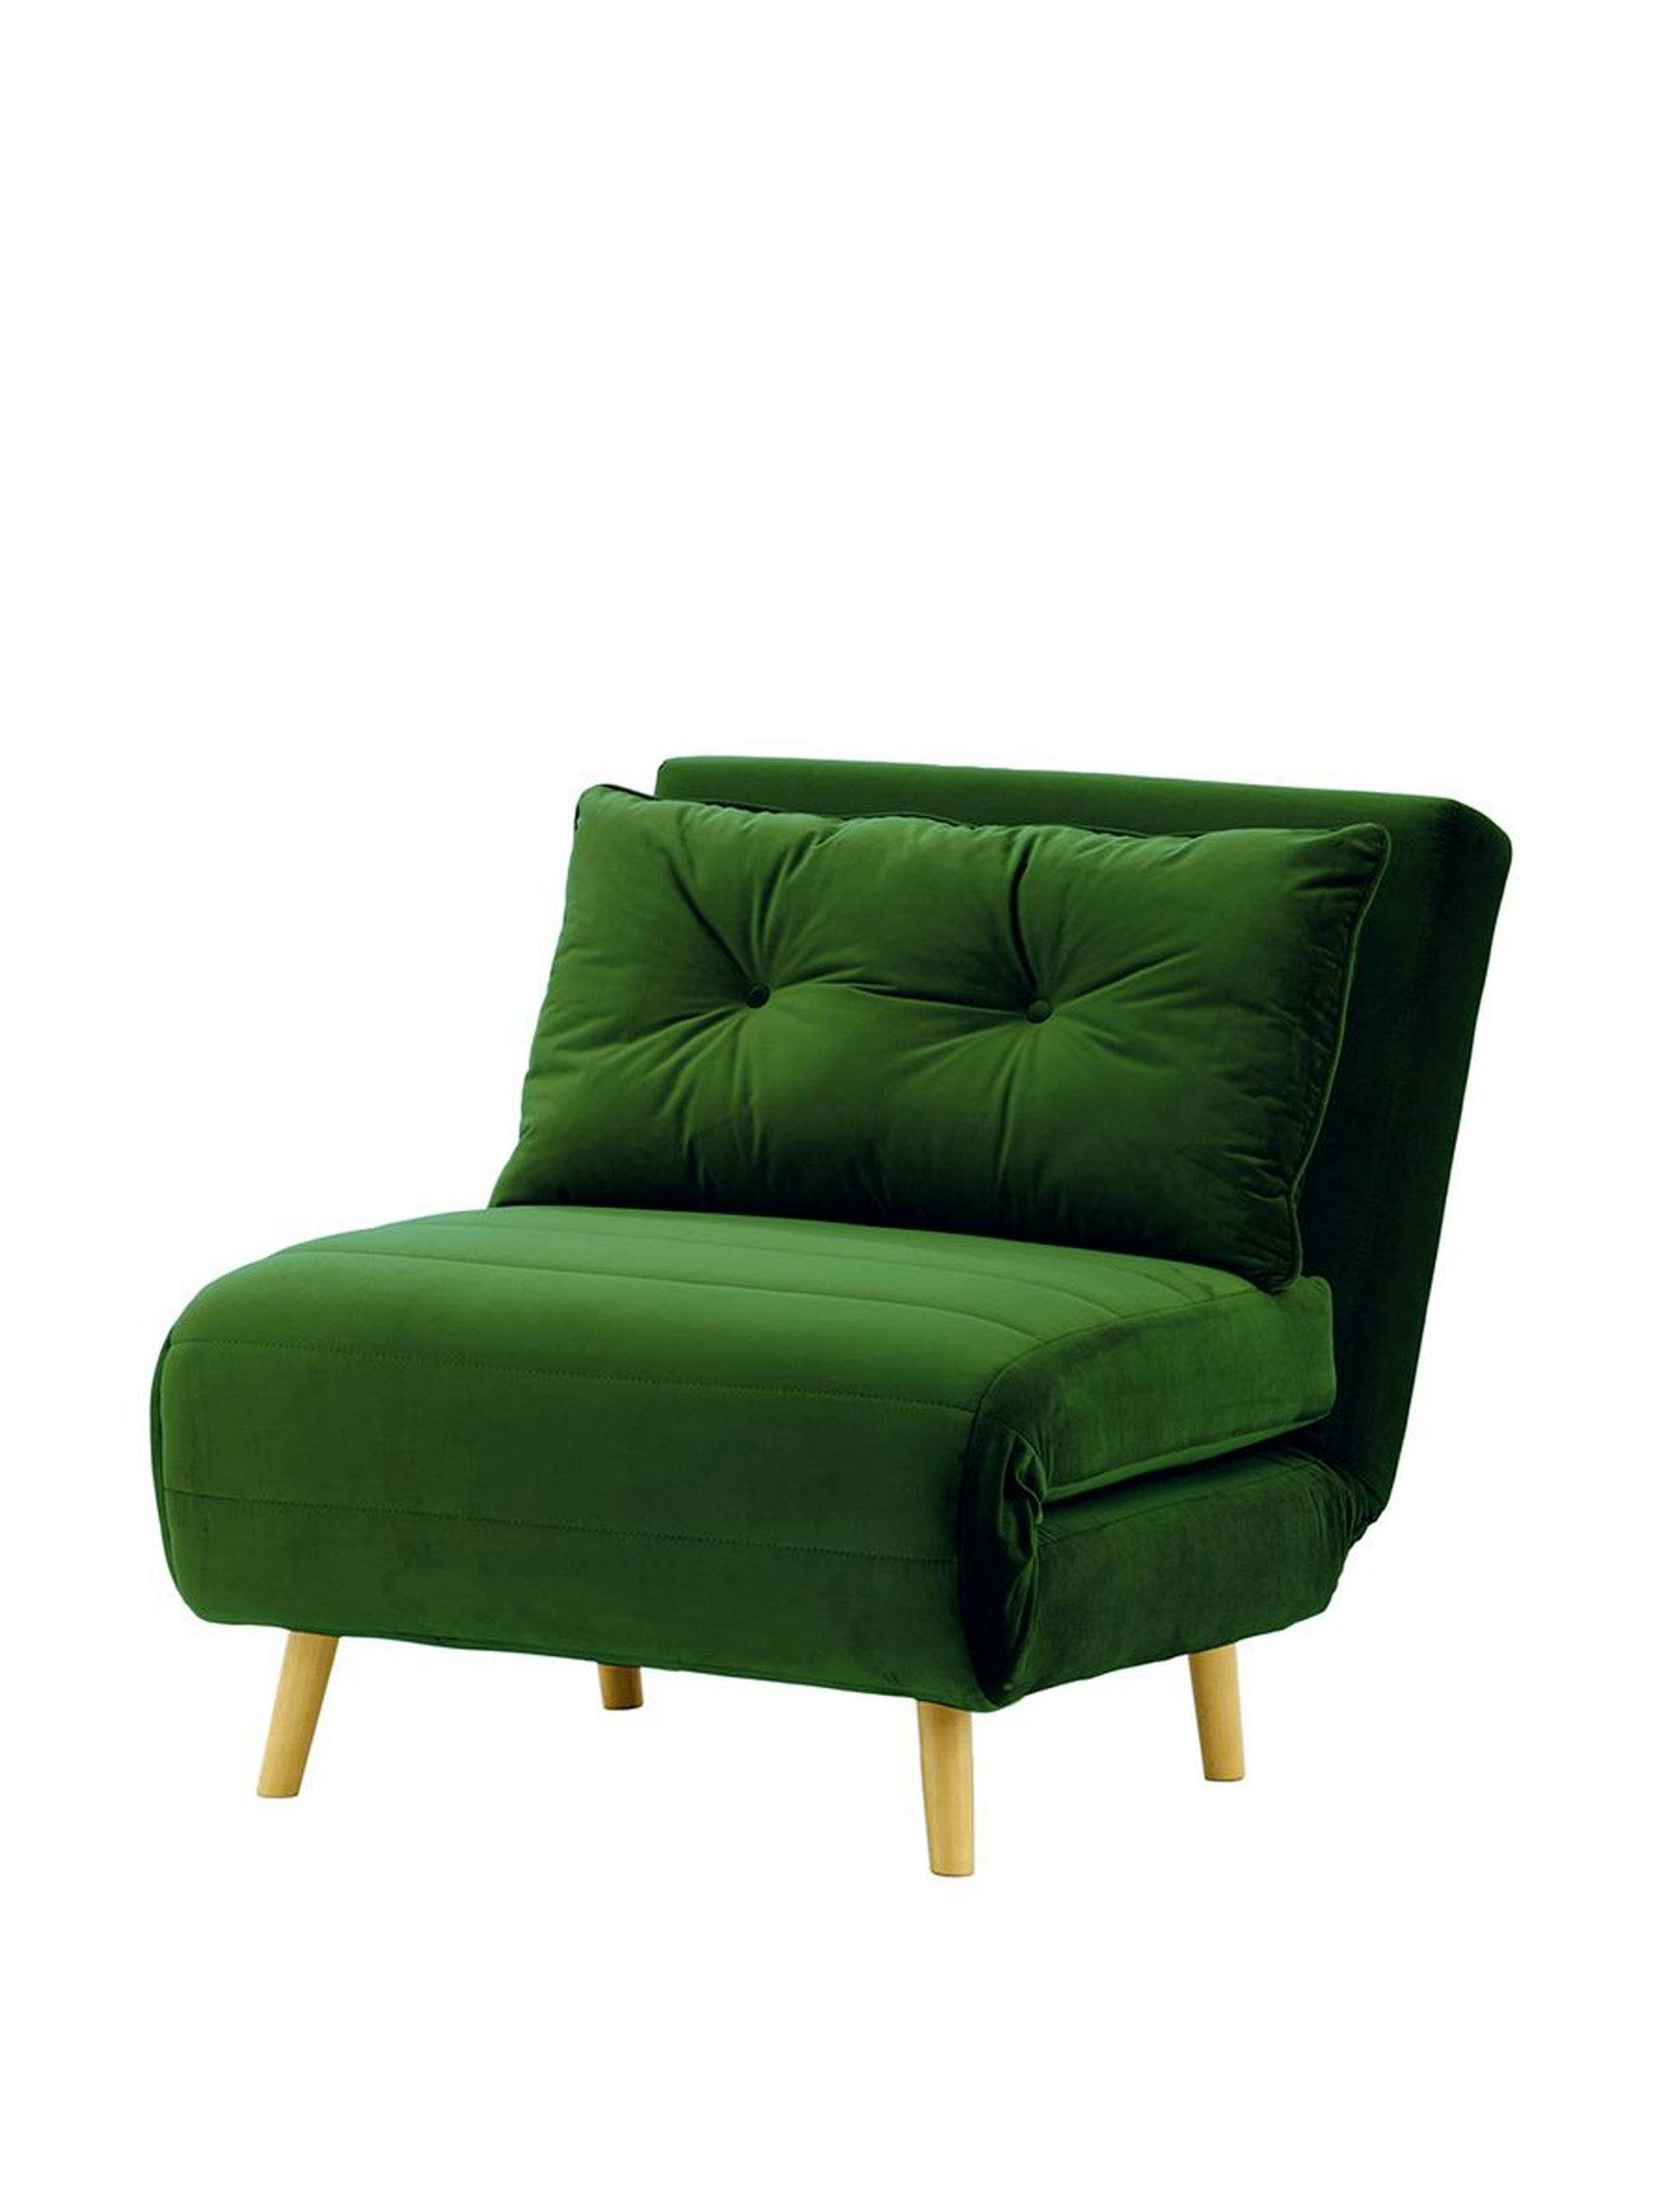 Flic single sofa bed chair